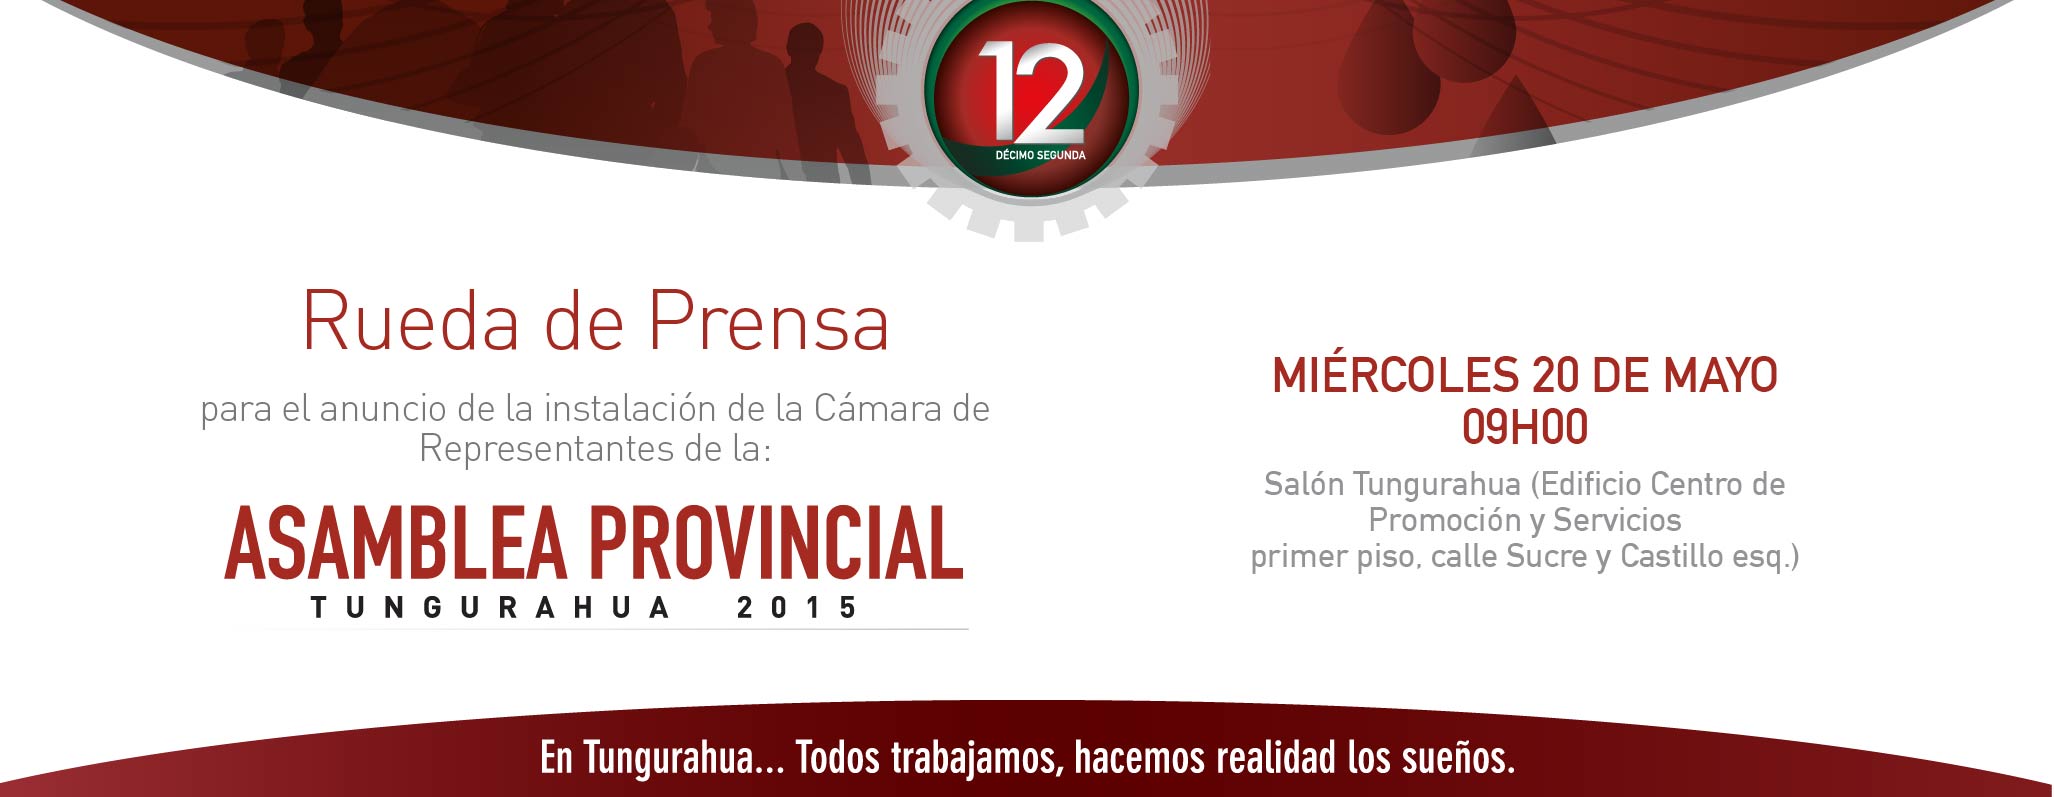 Rueda Prensa web Asamblea